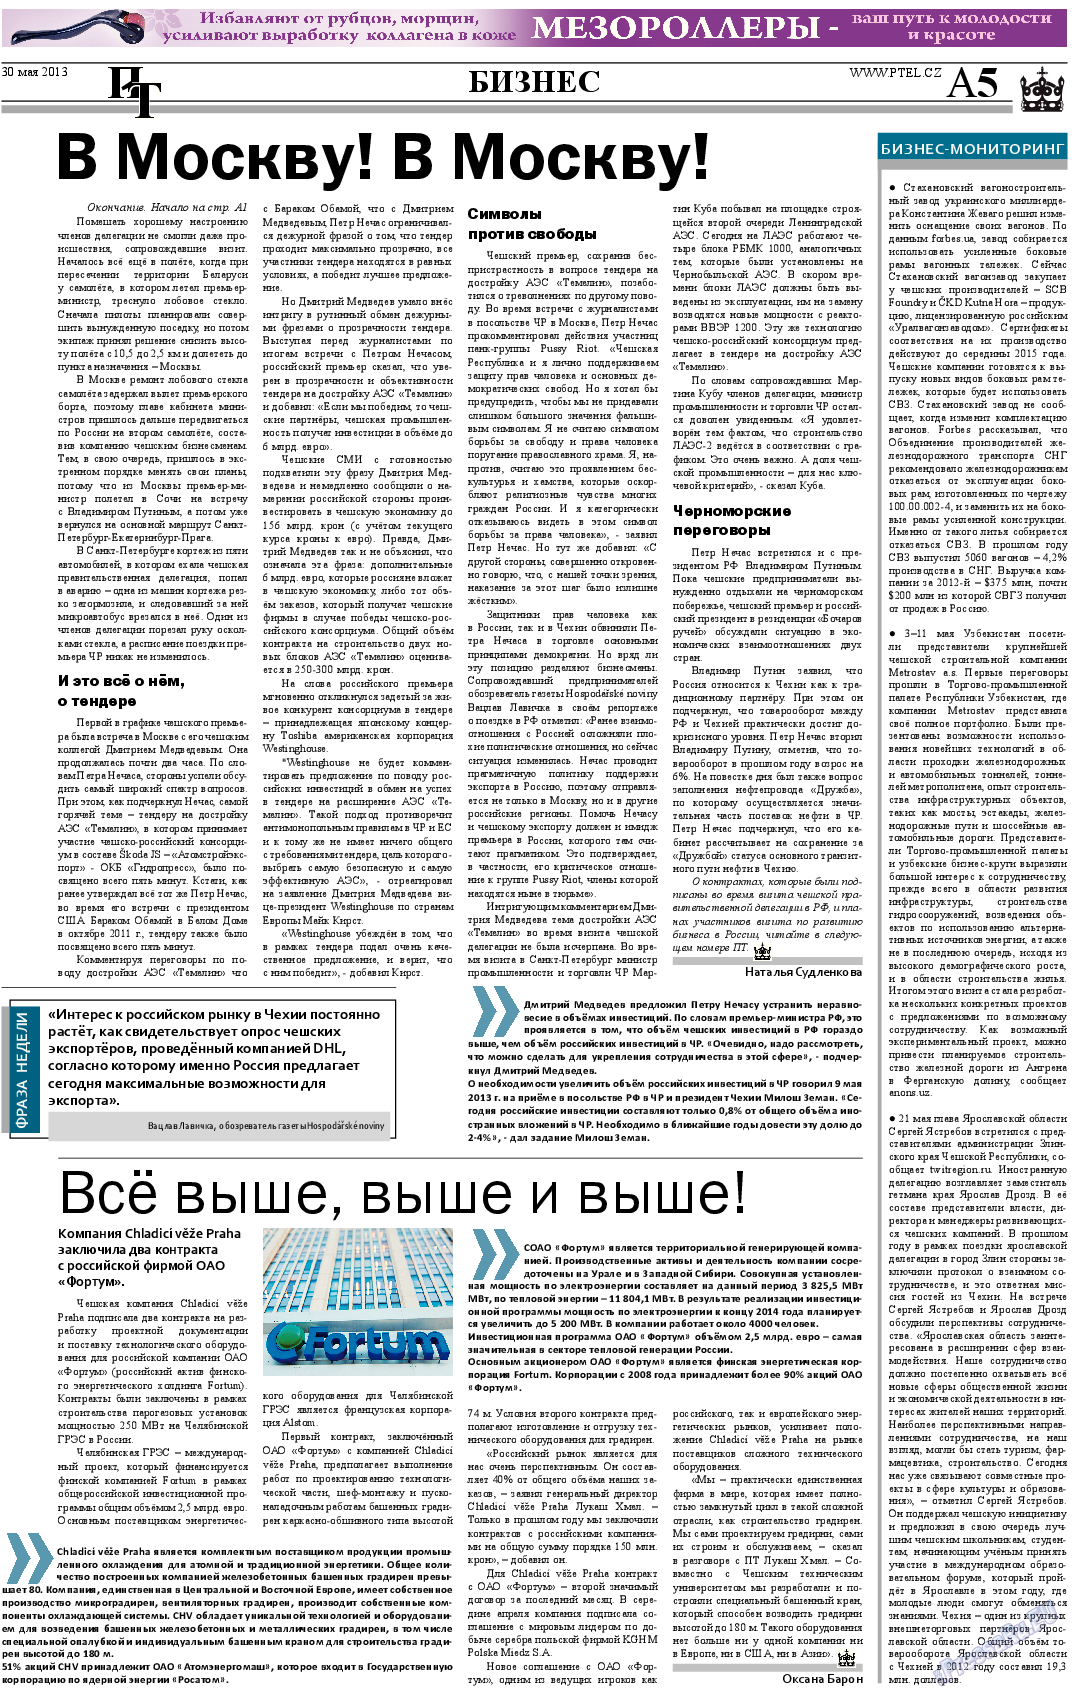 Пражский телеграф, газета. 2013 №21 стр.5